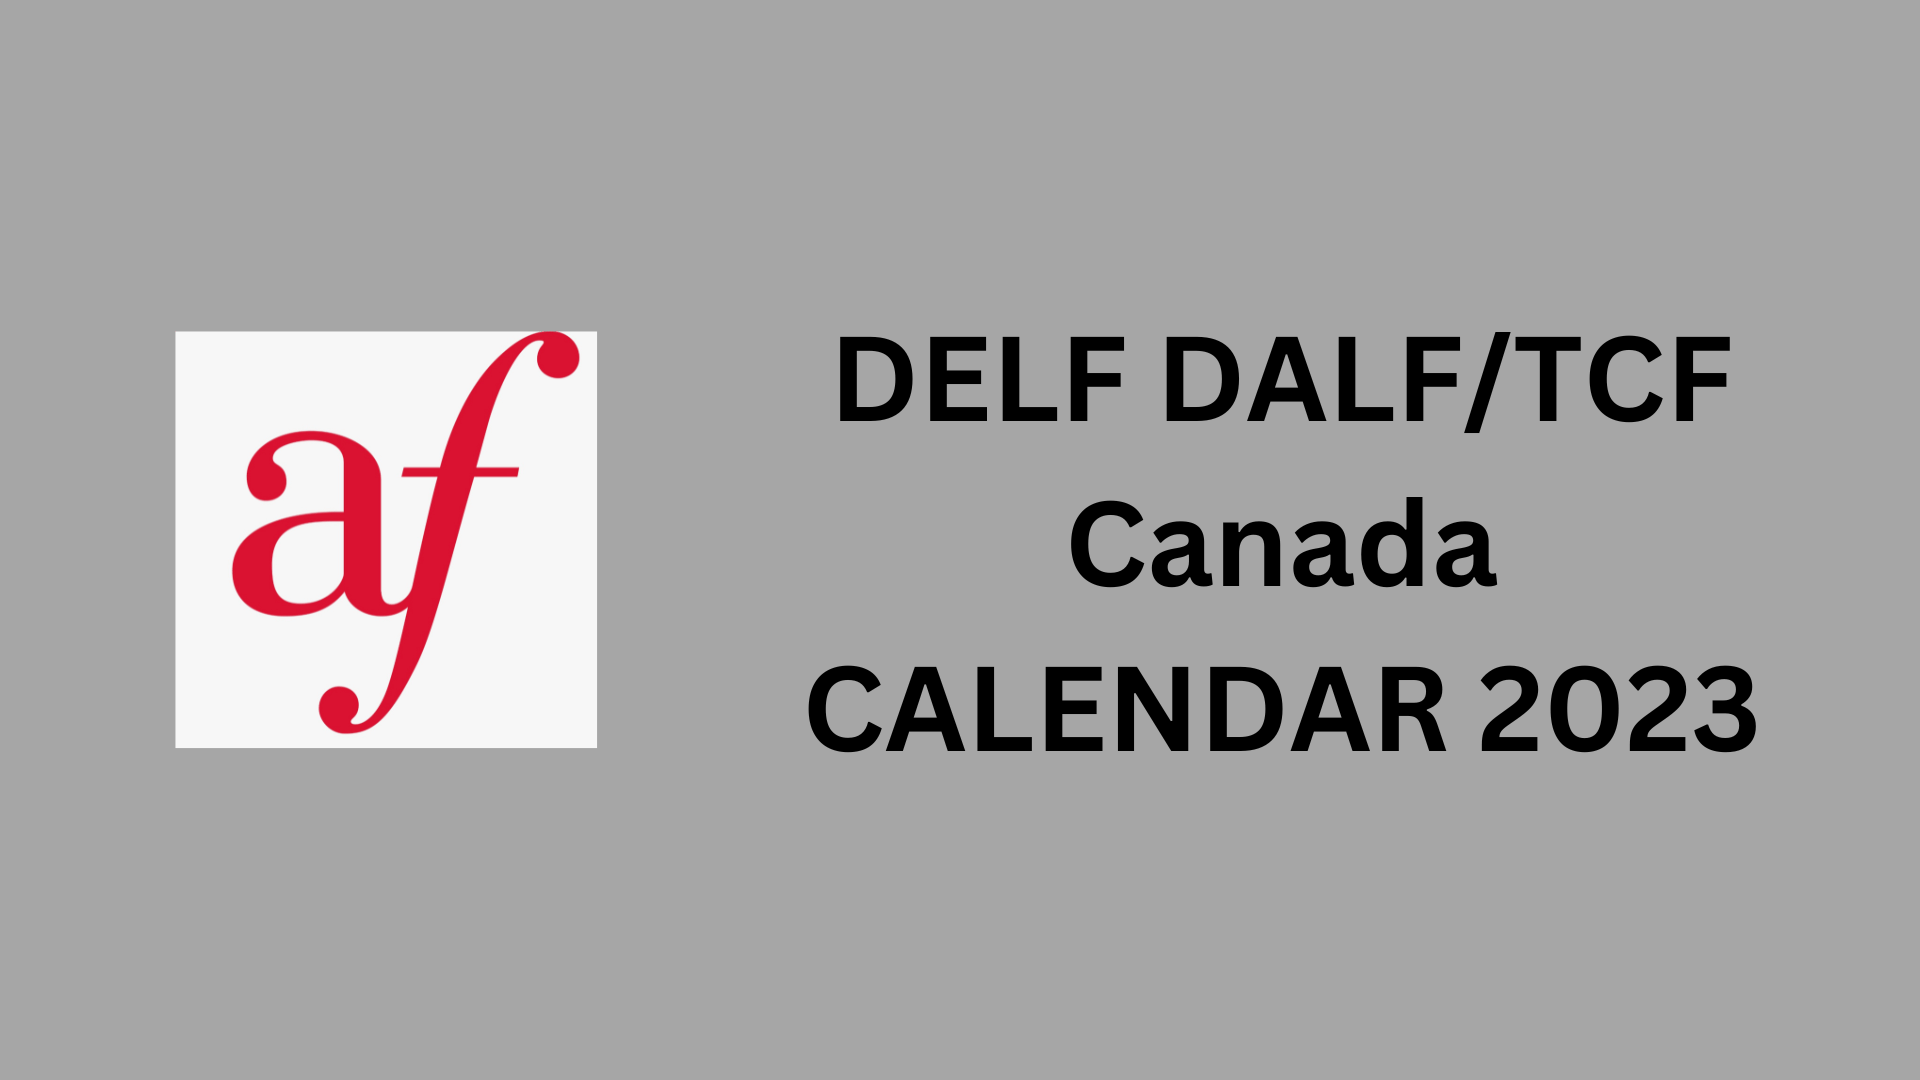 DELF DALF/ TCF Canada: Calendar 2023